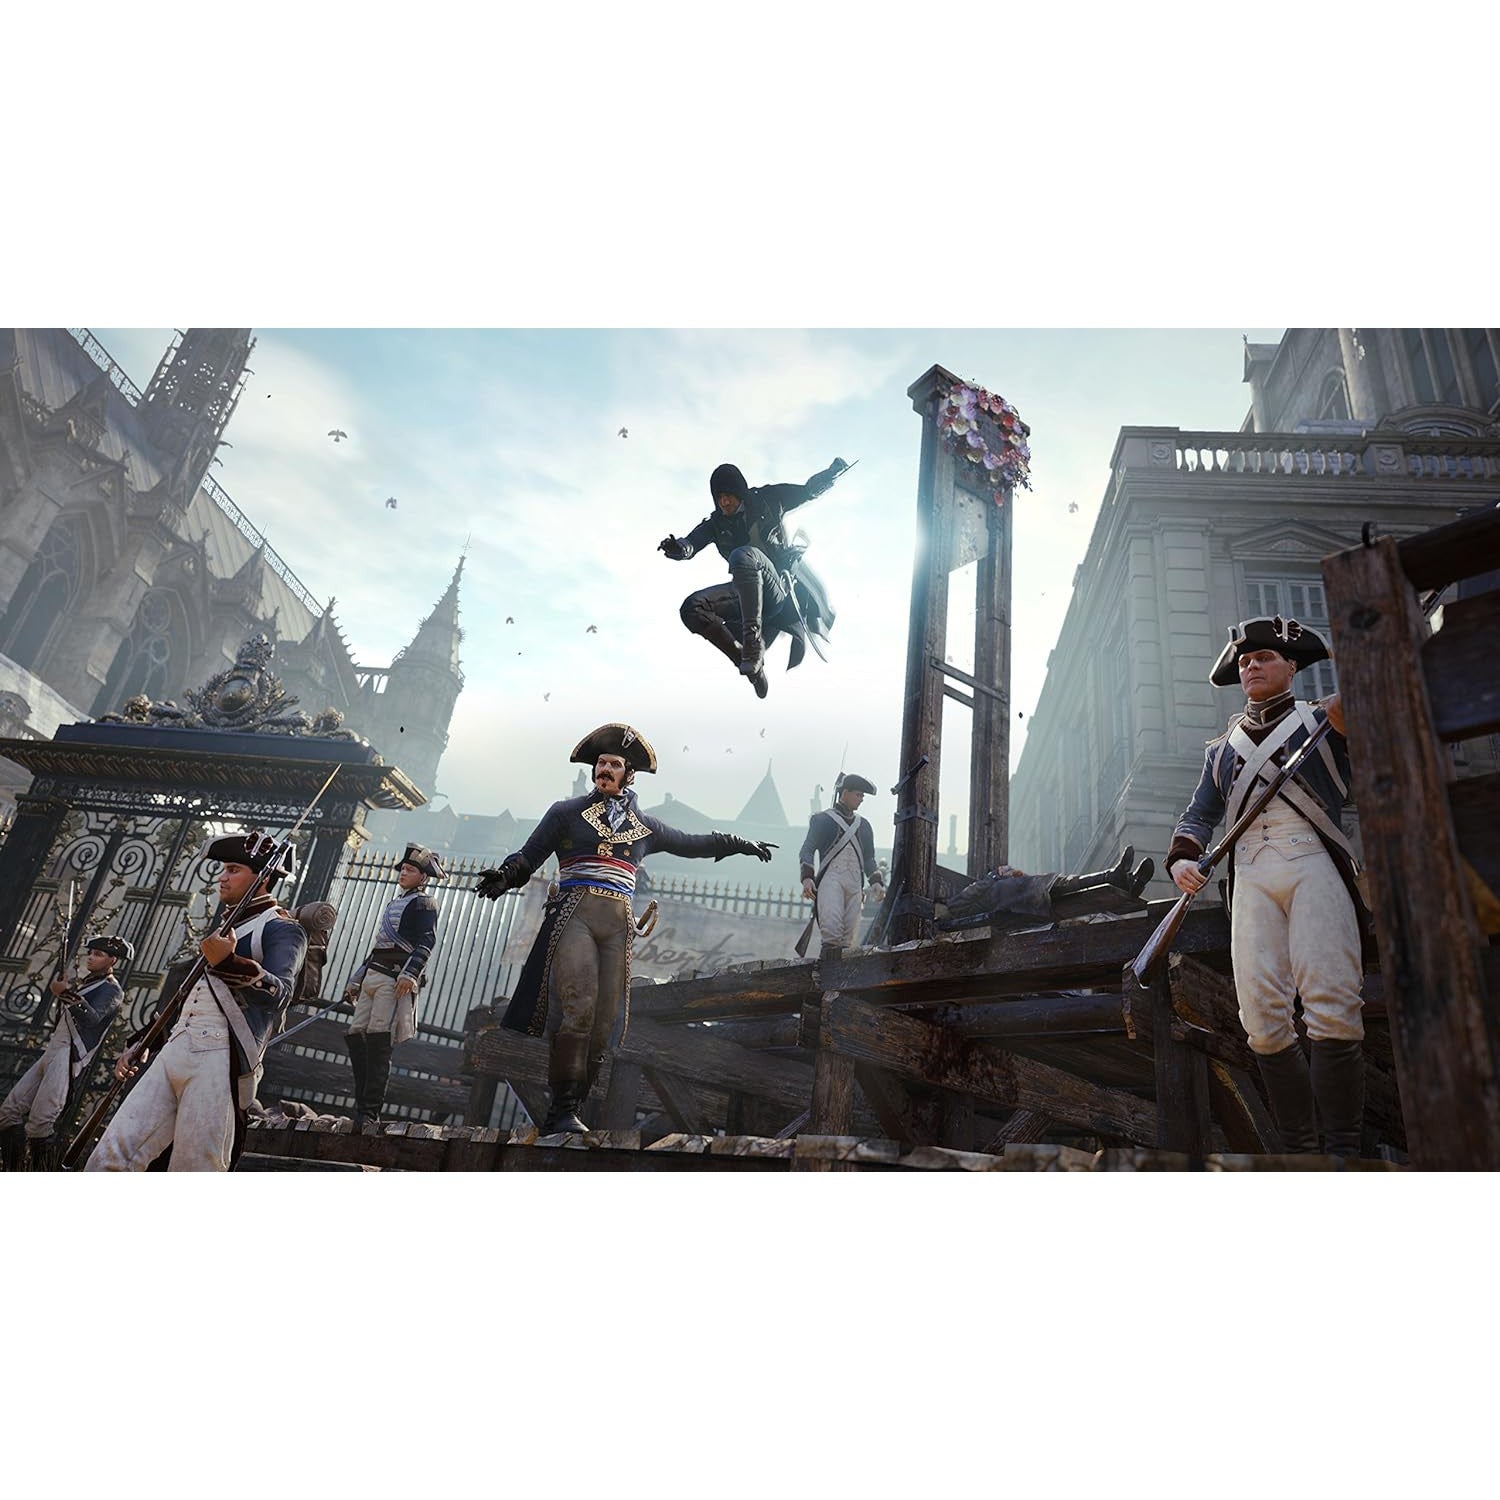 Assassin's Creed Unity (PS4)